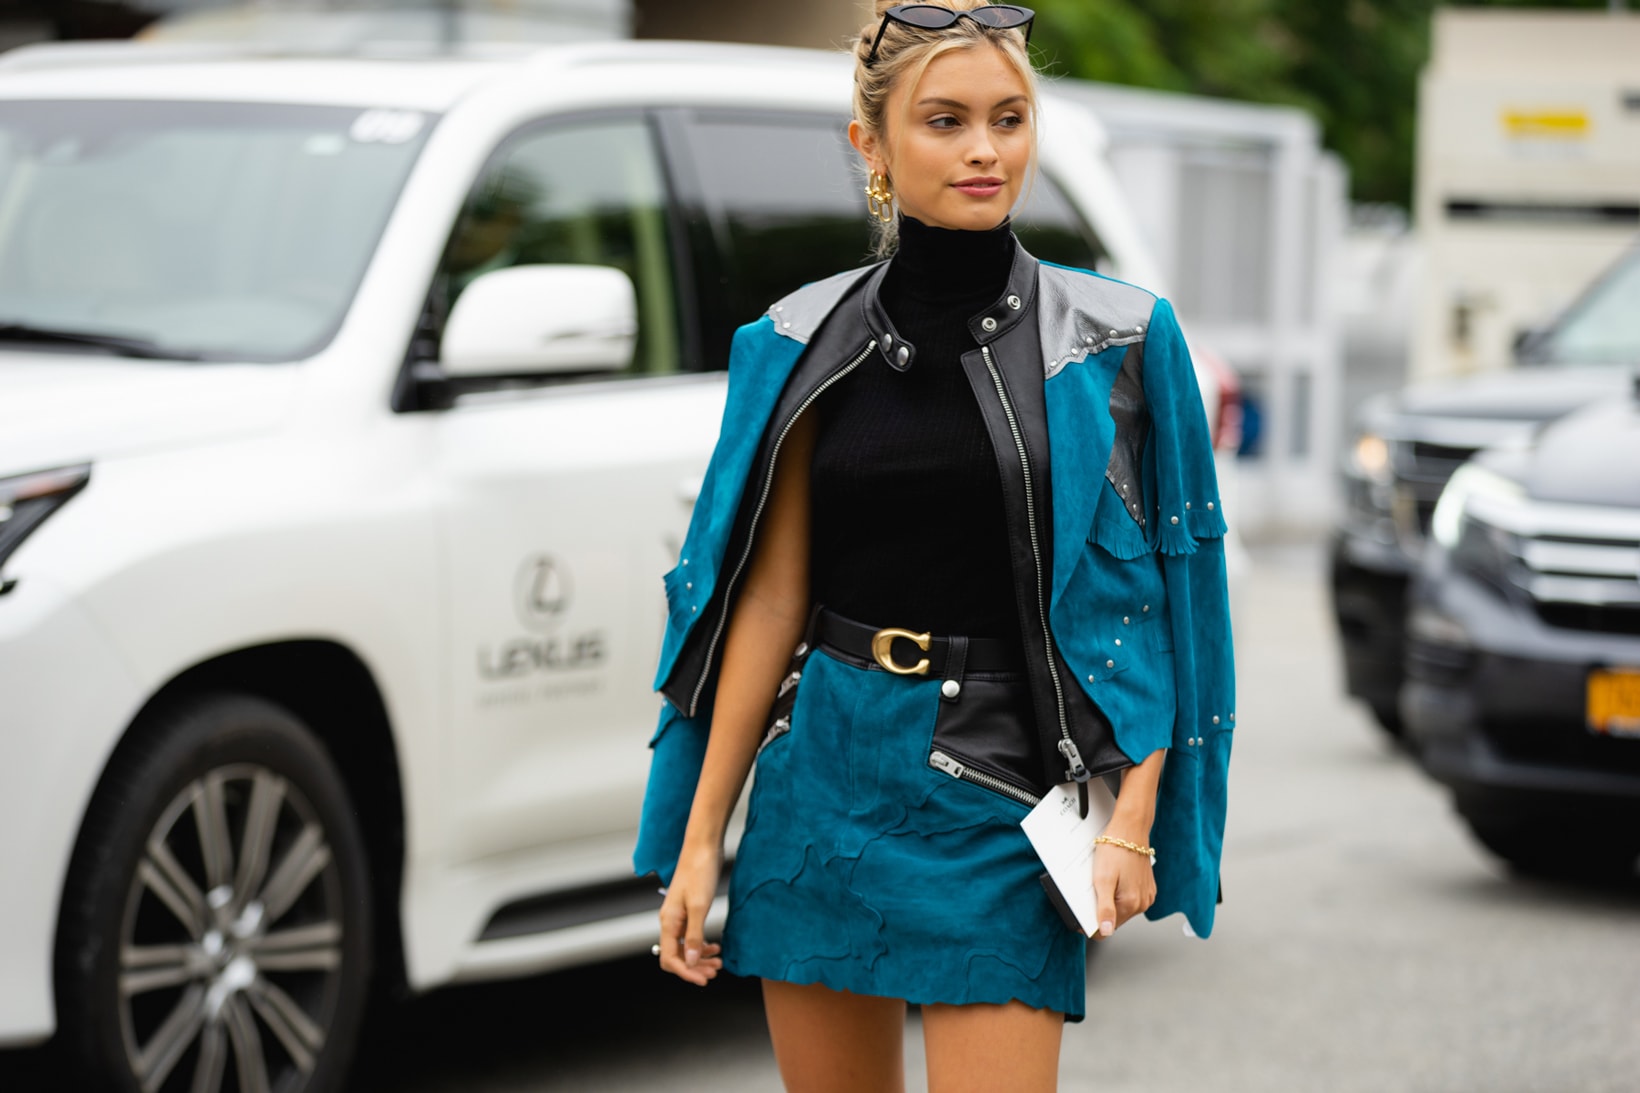 New York Fashion Week NYFW Street Style Street Snaps Jacket Skirt Teal Top Black